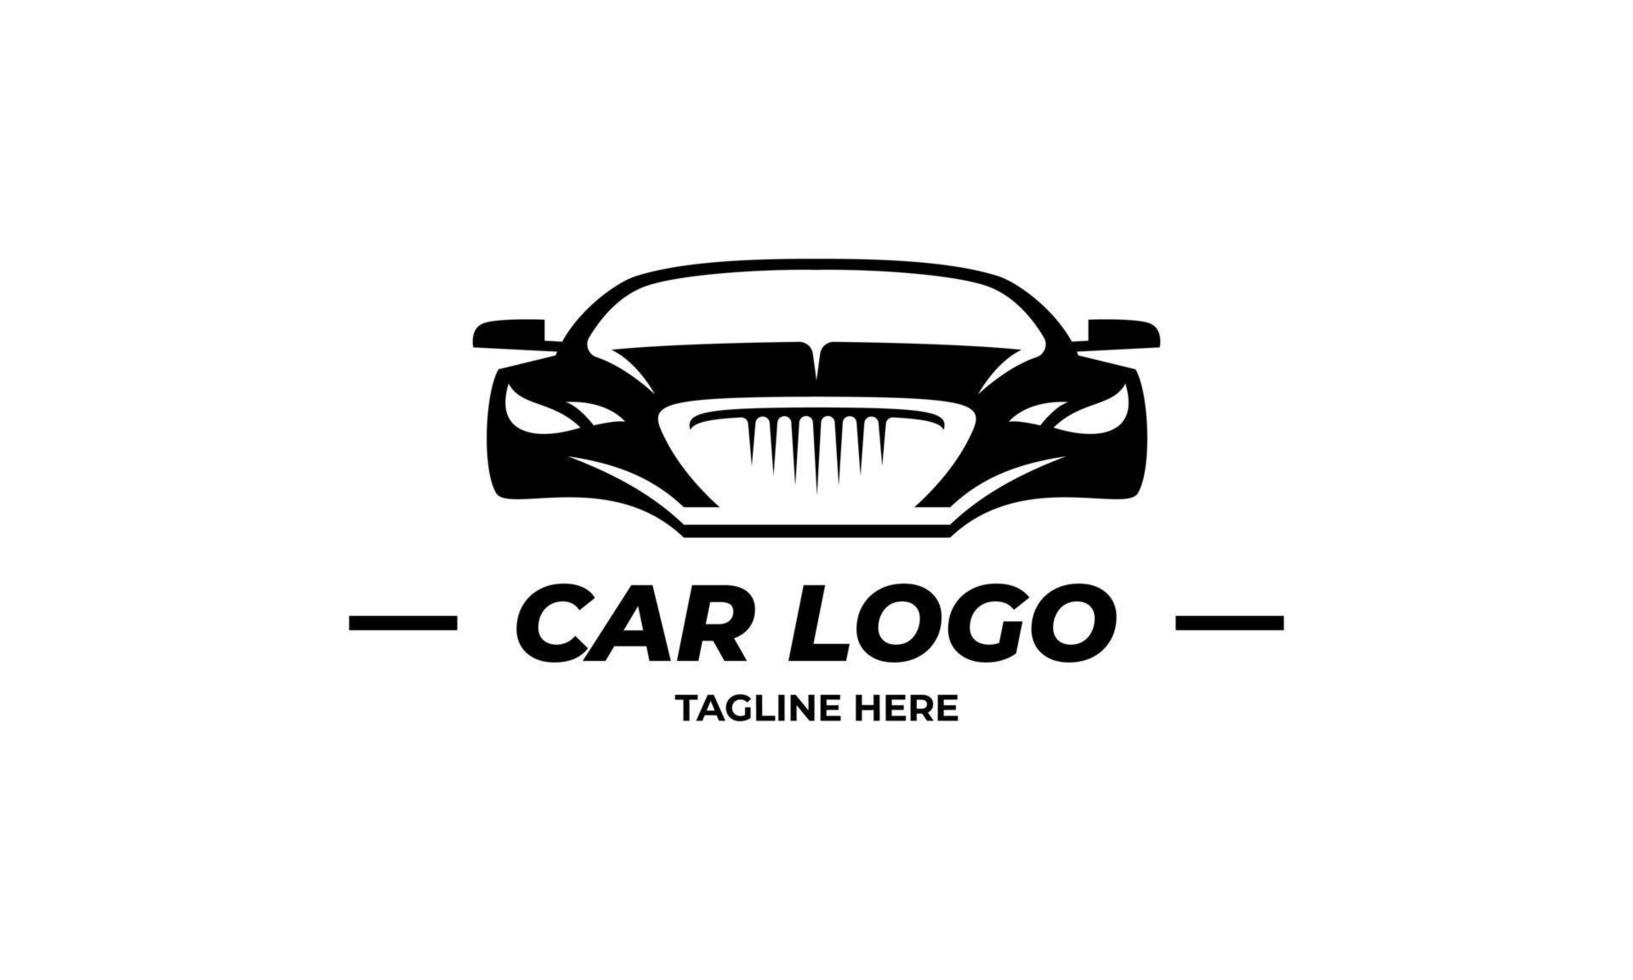 Muscle logo. Service car repair, car restoration and car club design elements. vector